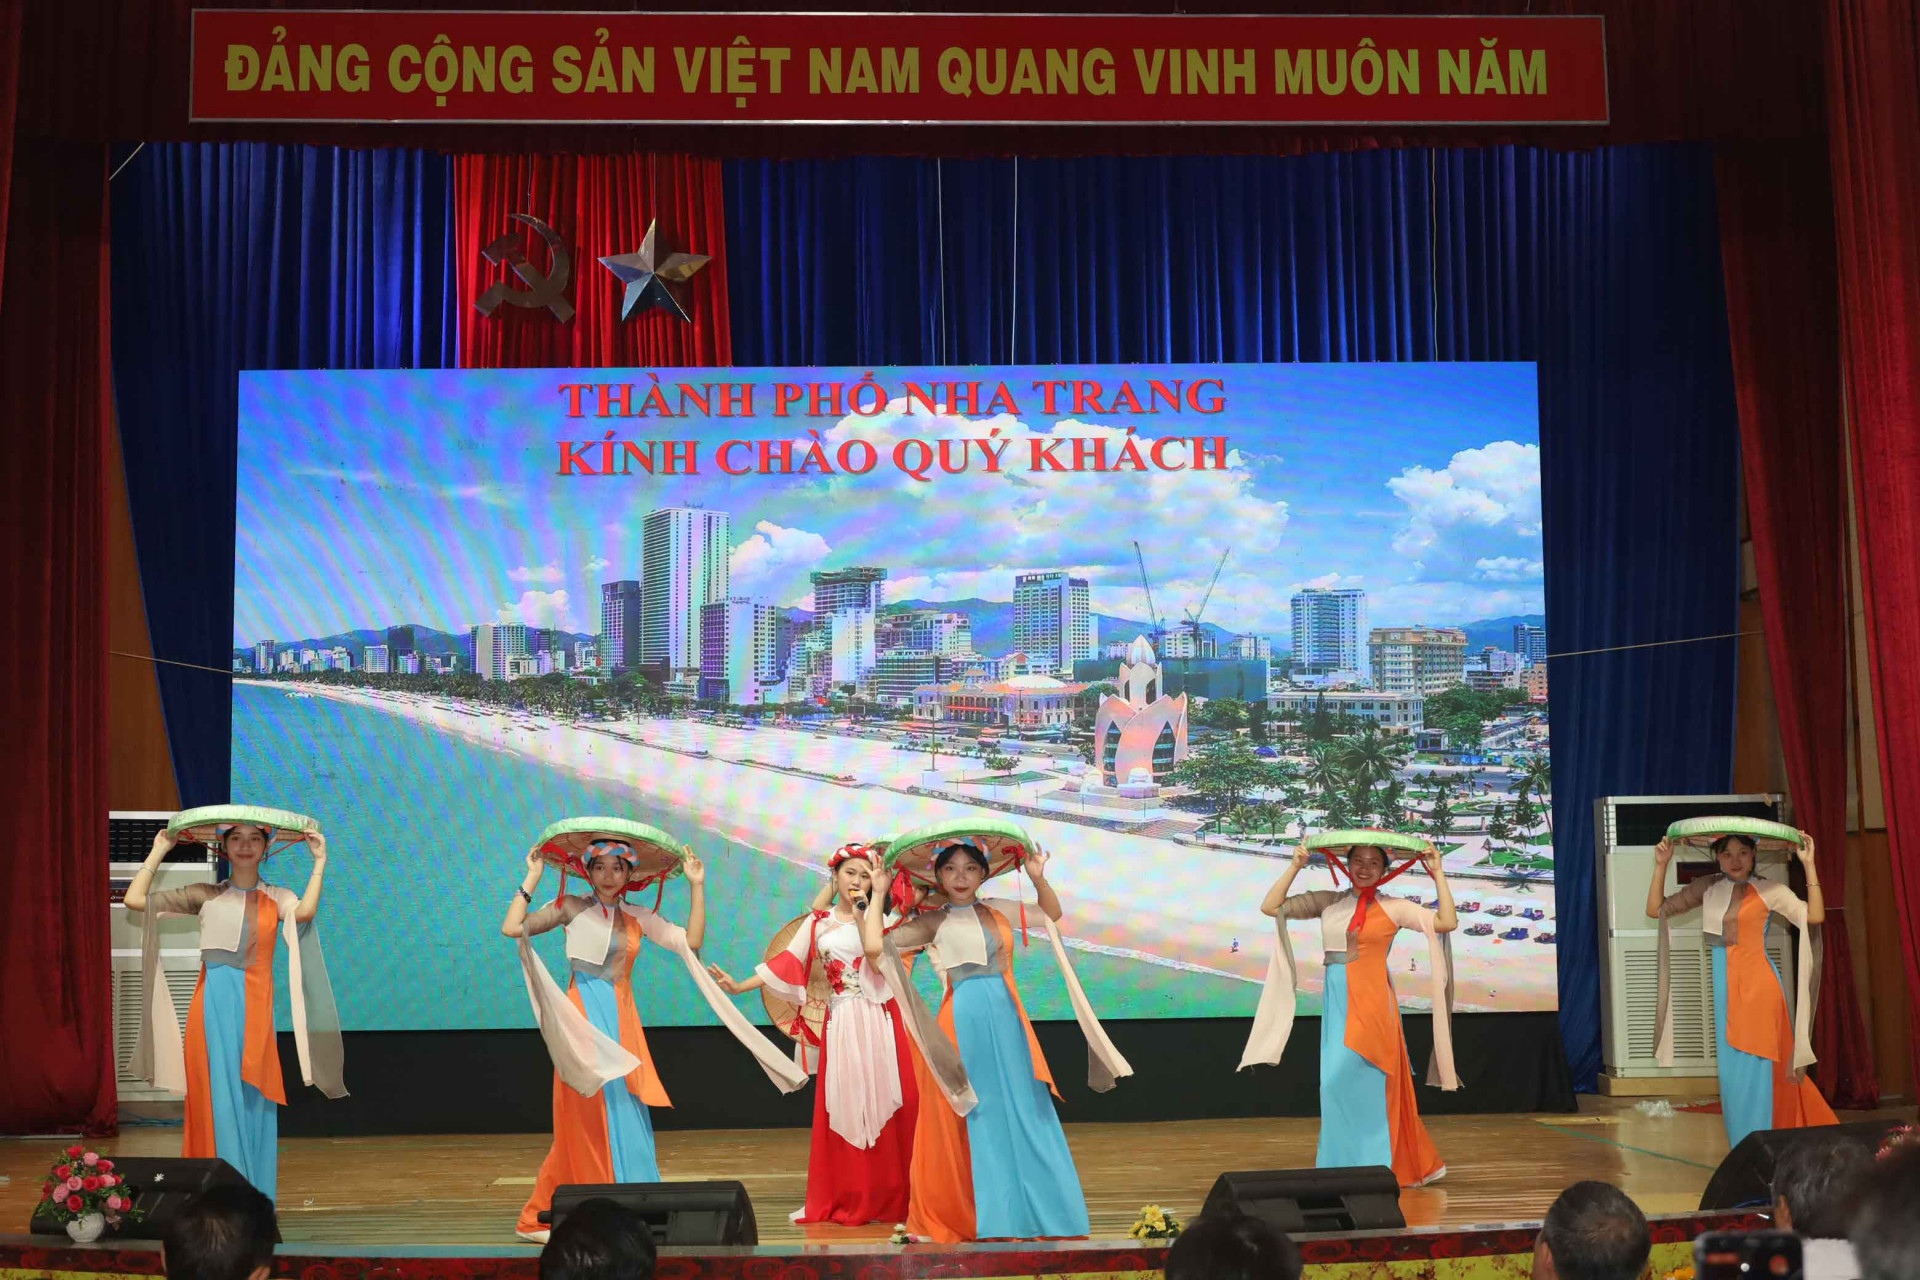 Traditional music performance of Nha Trang’s school